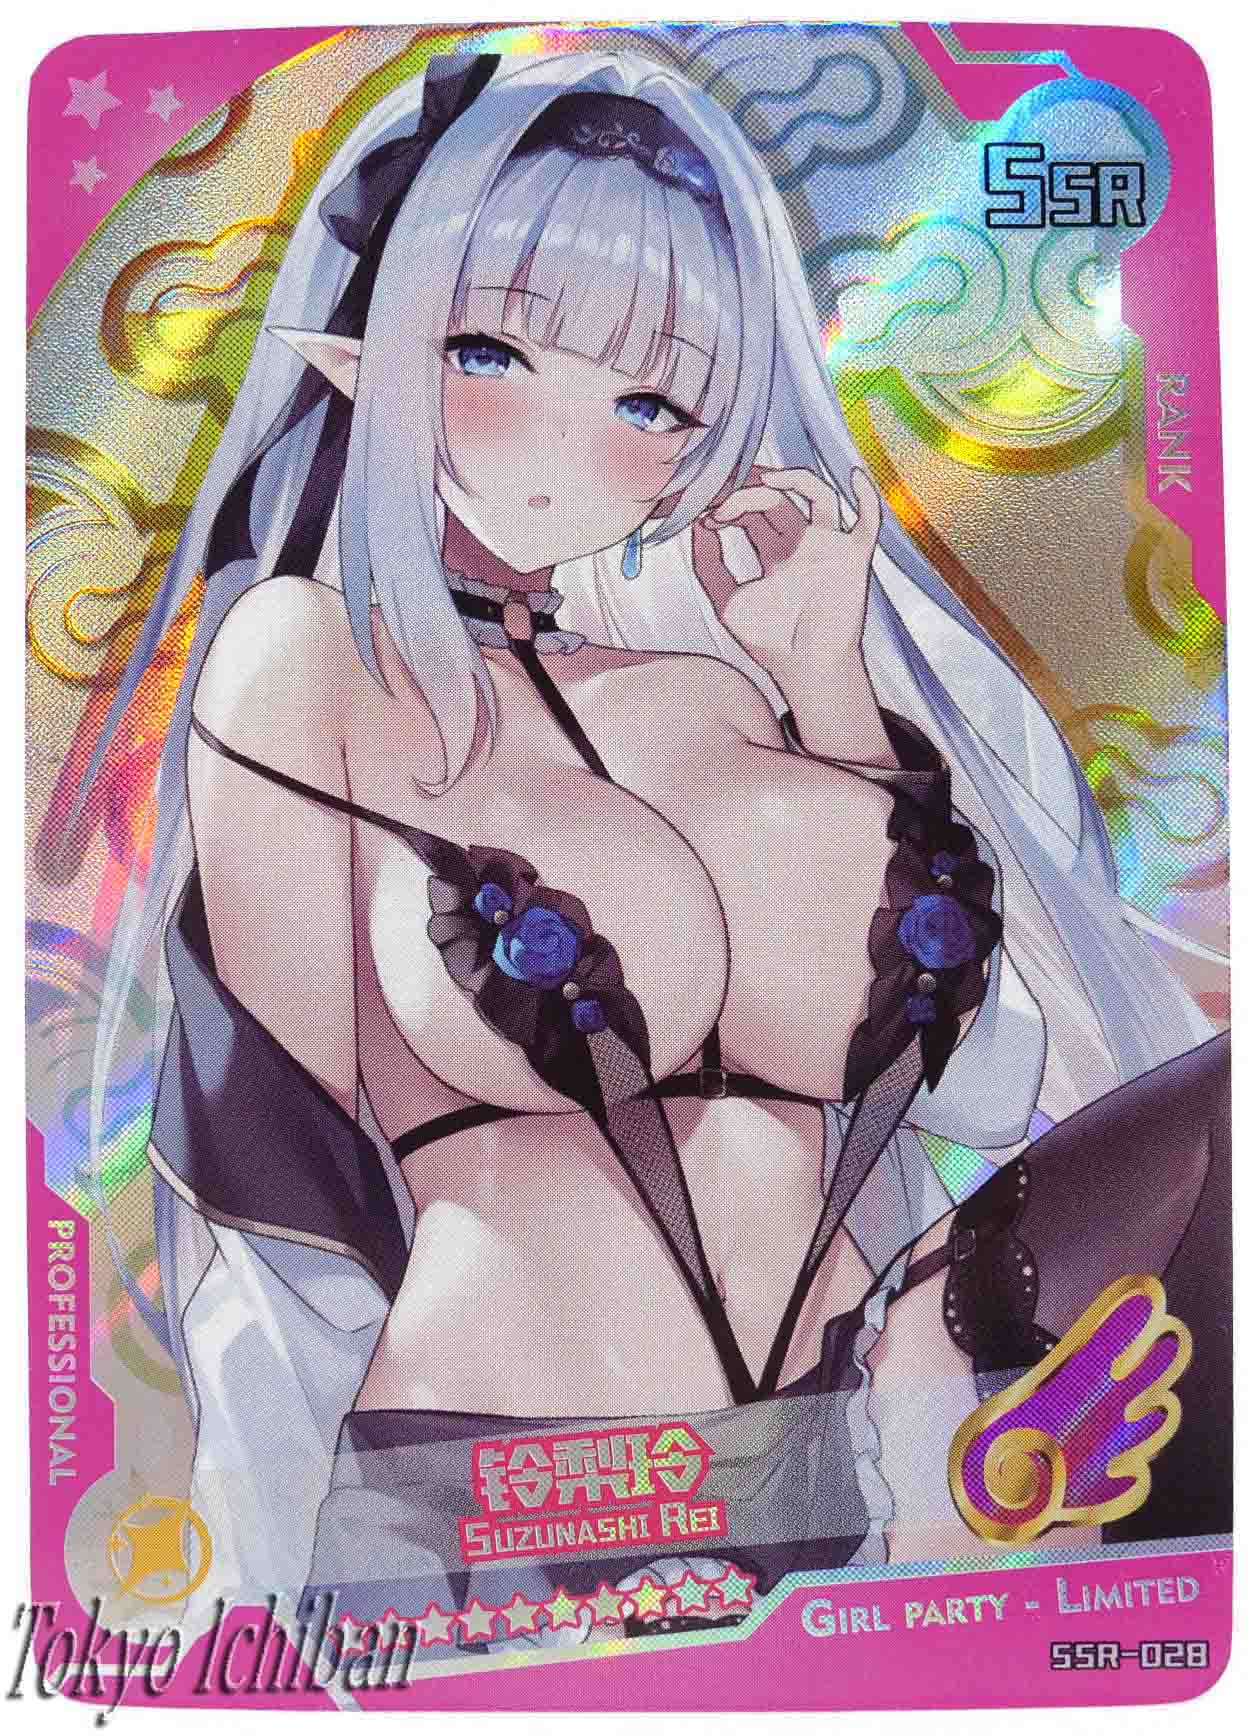 Sexy Card Yandere Suzunashi Rei Edition Limited SSR-028